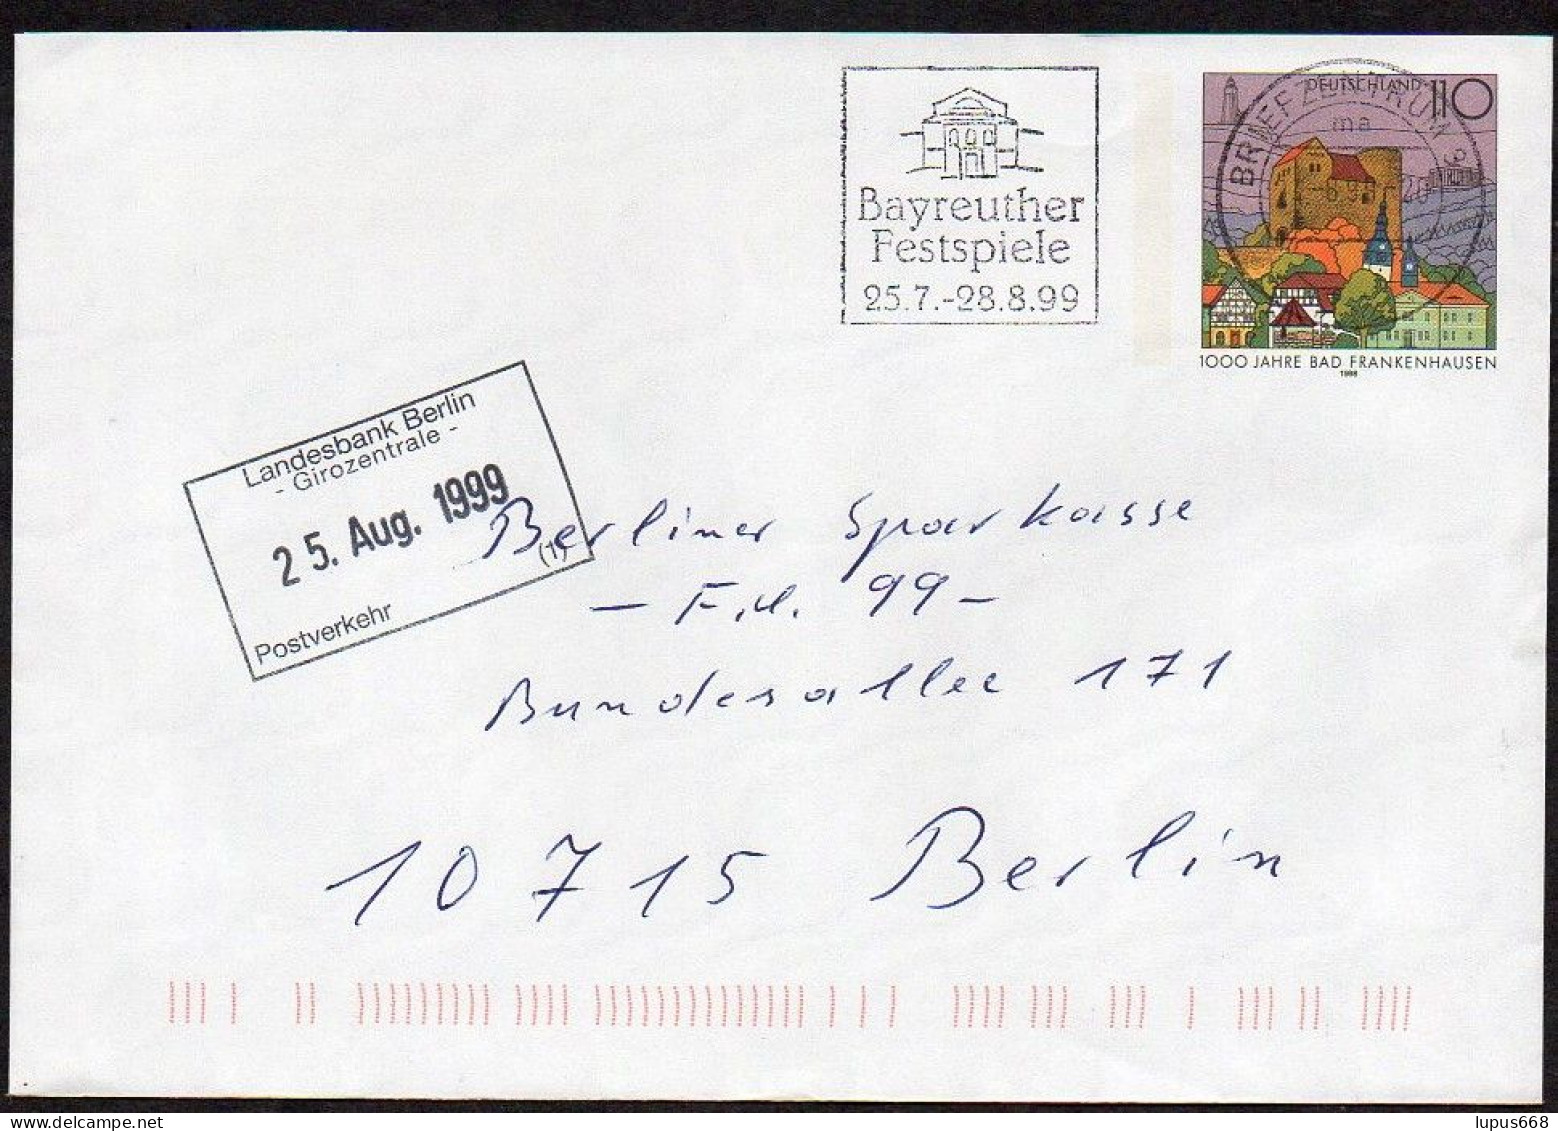 BRD 1999 Umschlag/ Entire Cover  O/ Used ,  Bad Frankenhausen O BZ 95  Bayreuther Festspiele - Umschläge - Gebraucht